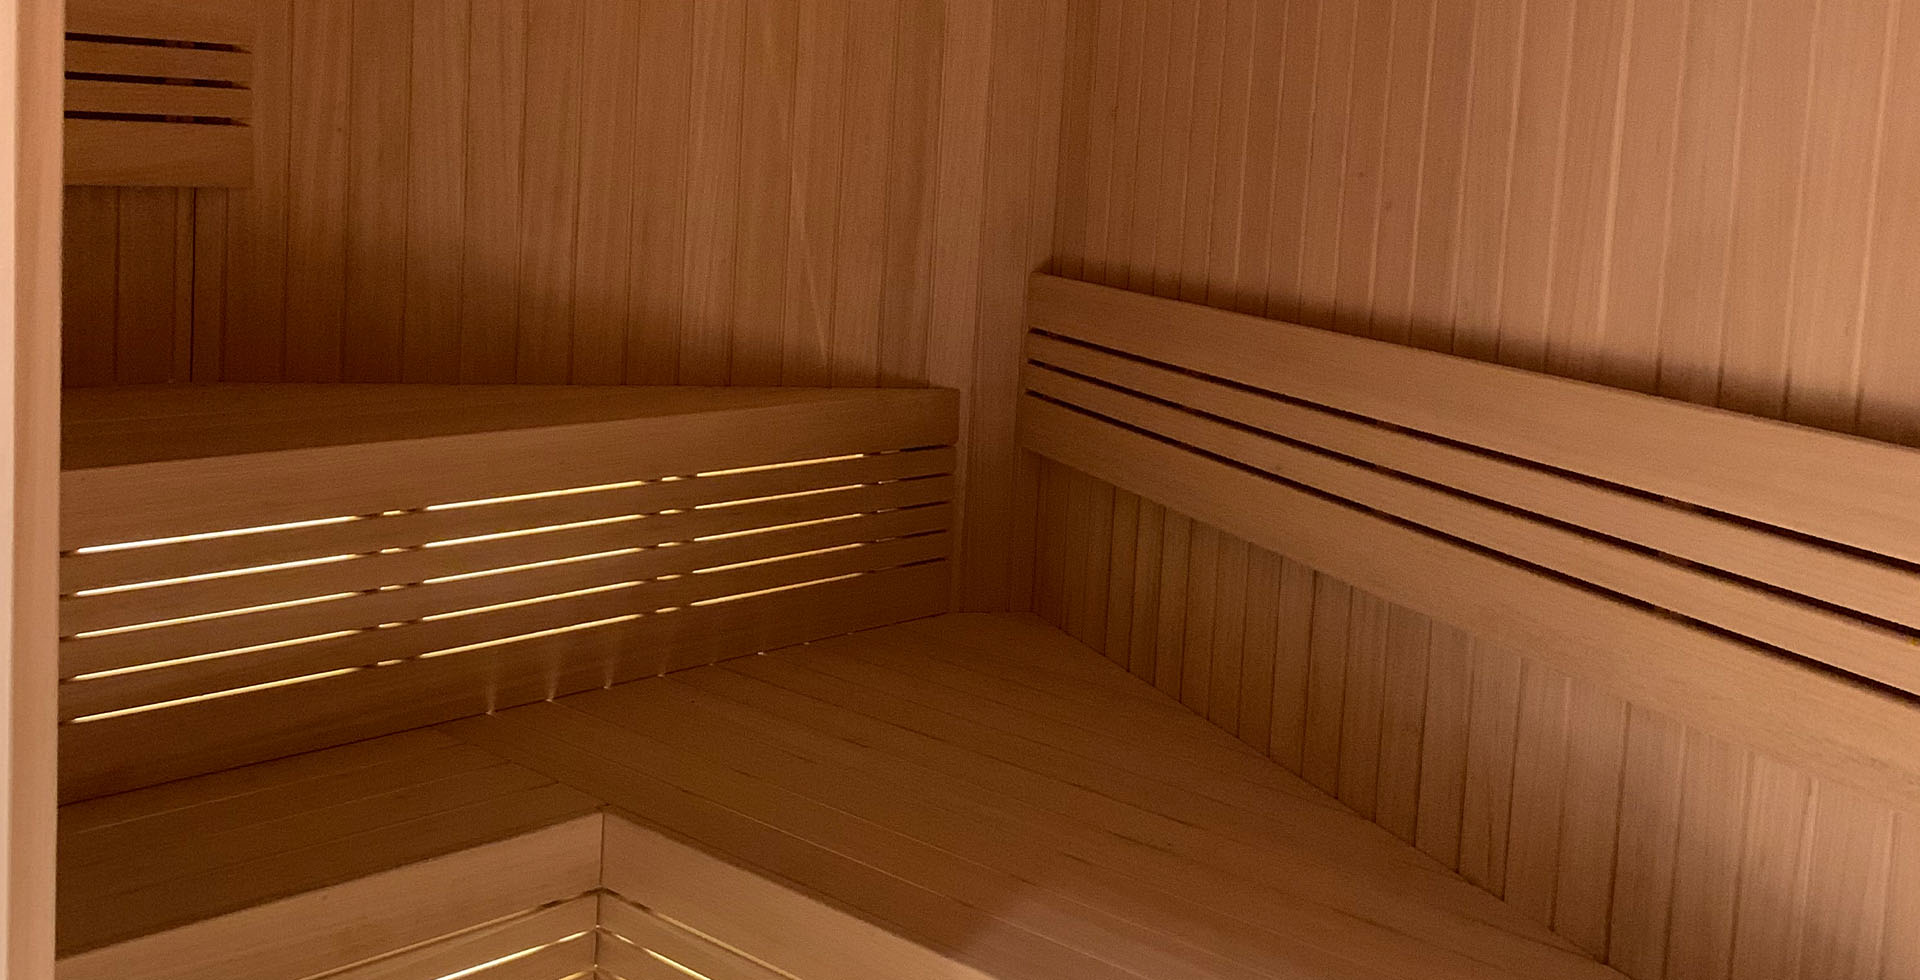 Industrial Tranquility: Sauna Dekor's Bochum Sauna, A Designer's Urban Oasis